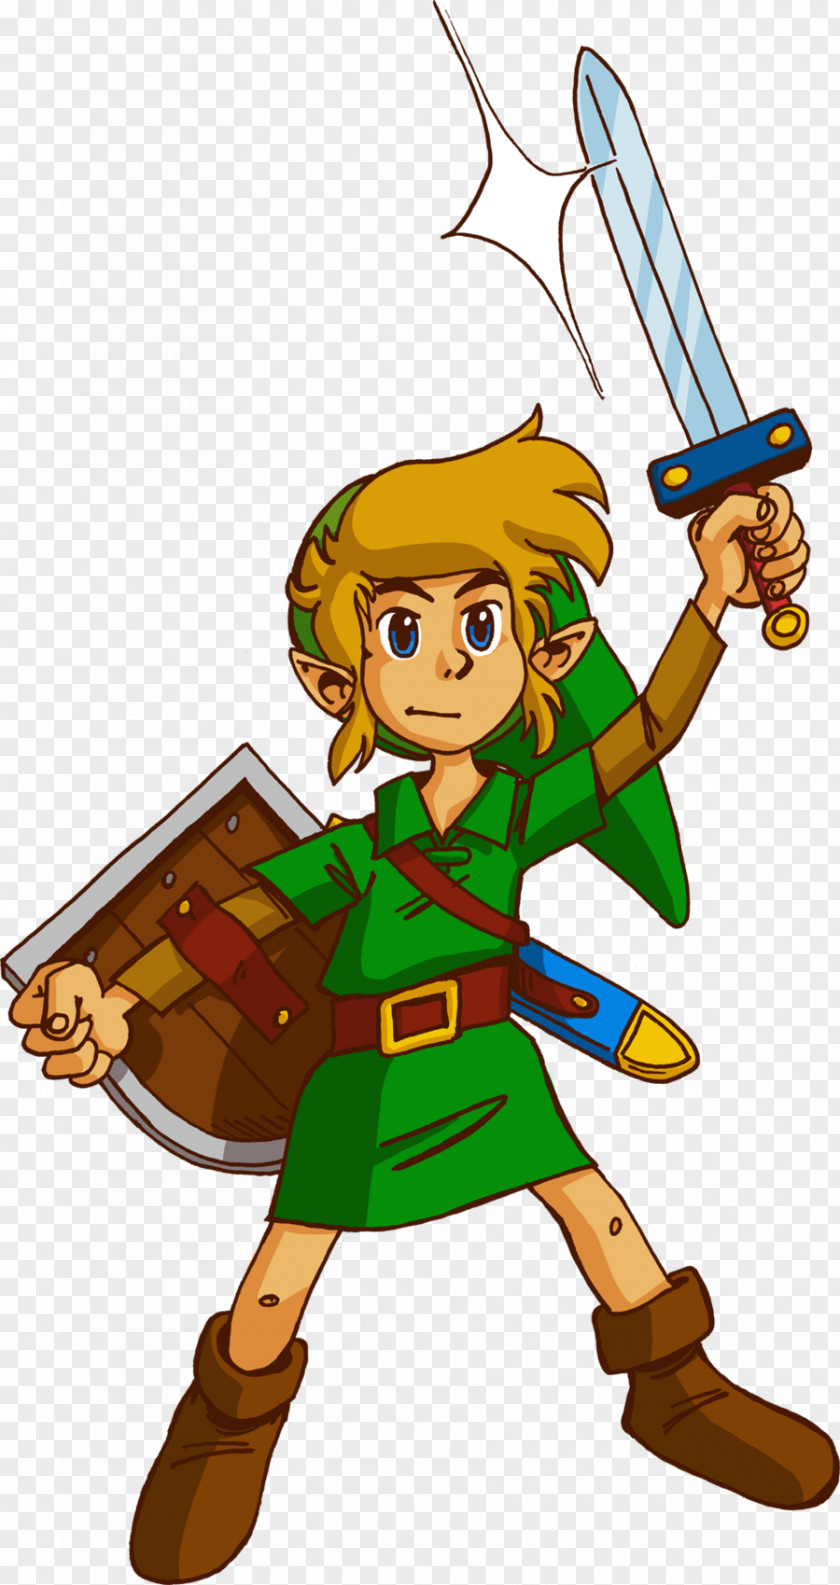 Sword Weapon The Legend Of Zelda: A Link Between Worlds Image Clip Art PNG